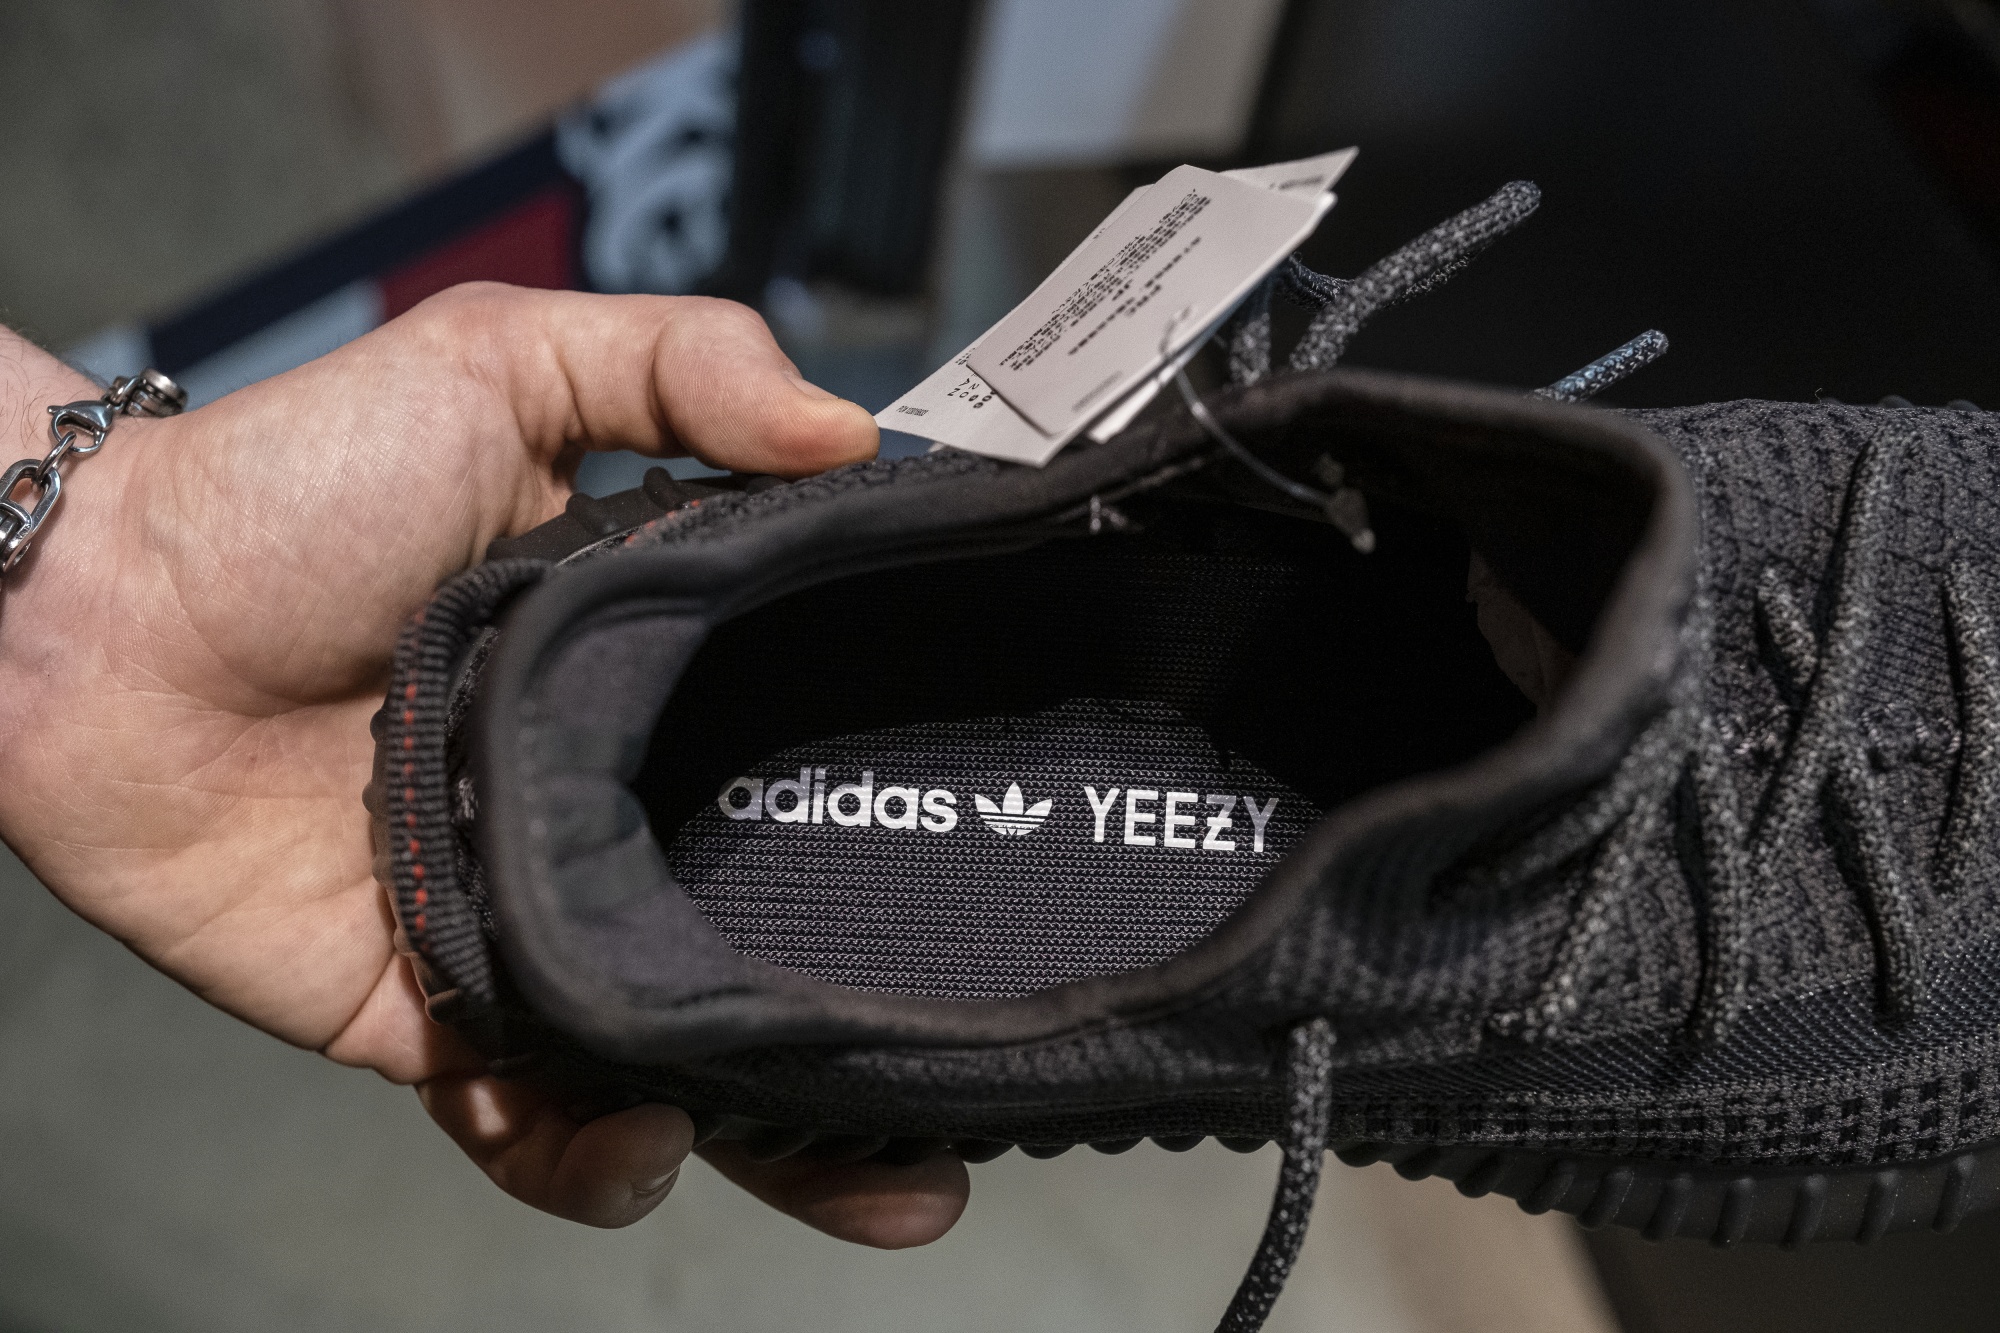 uitsterven neerhalen Microcomputer Yeezy Shoes Boost Adidas' Earnings Guidance - Bloomberg